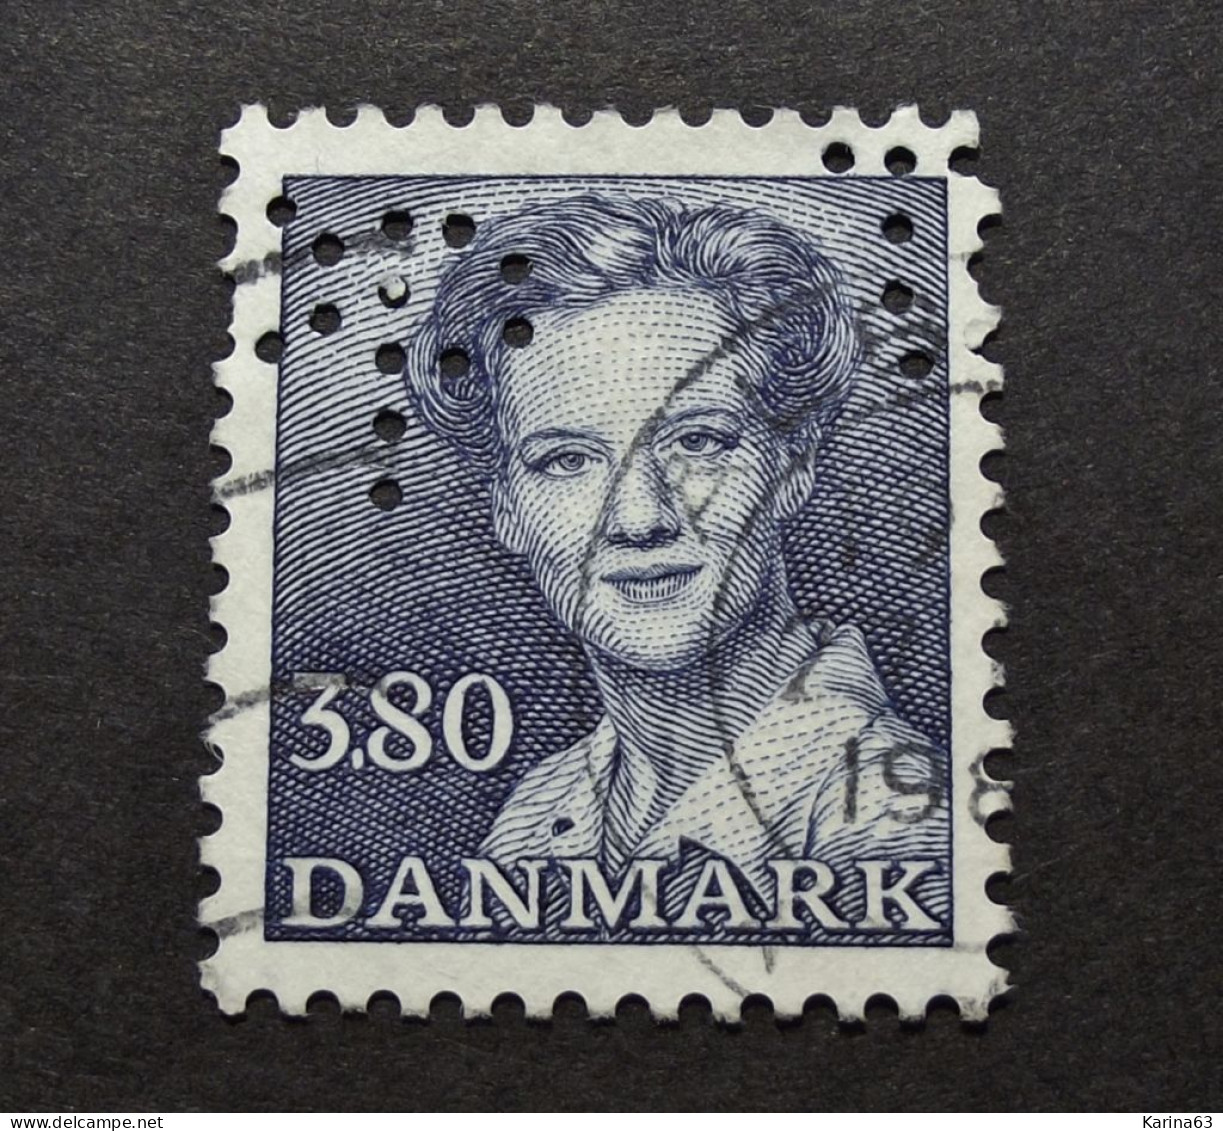 Denmark  - Danemark - 1975 - Queen Margrethe Perfin -  Topsikring Insurance Company From Copenhagen   - Cancelled - Gebraucht